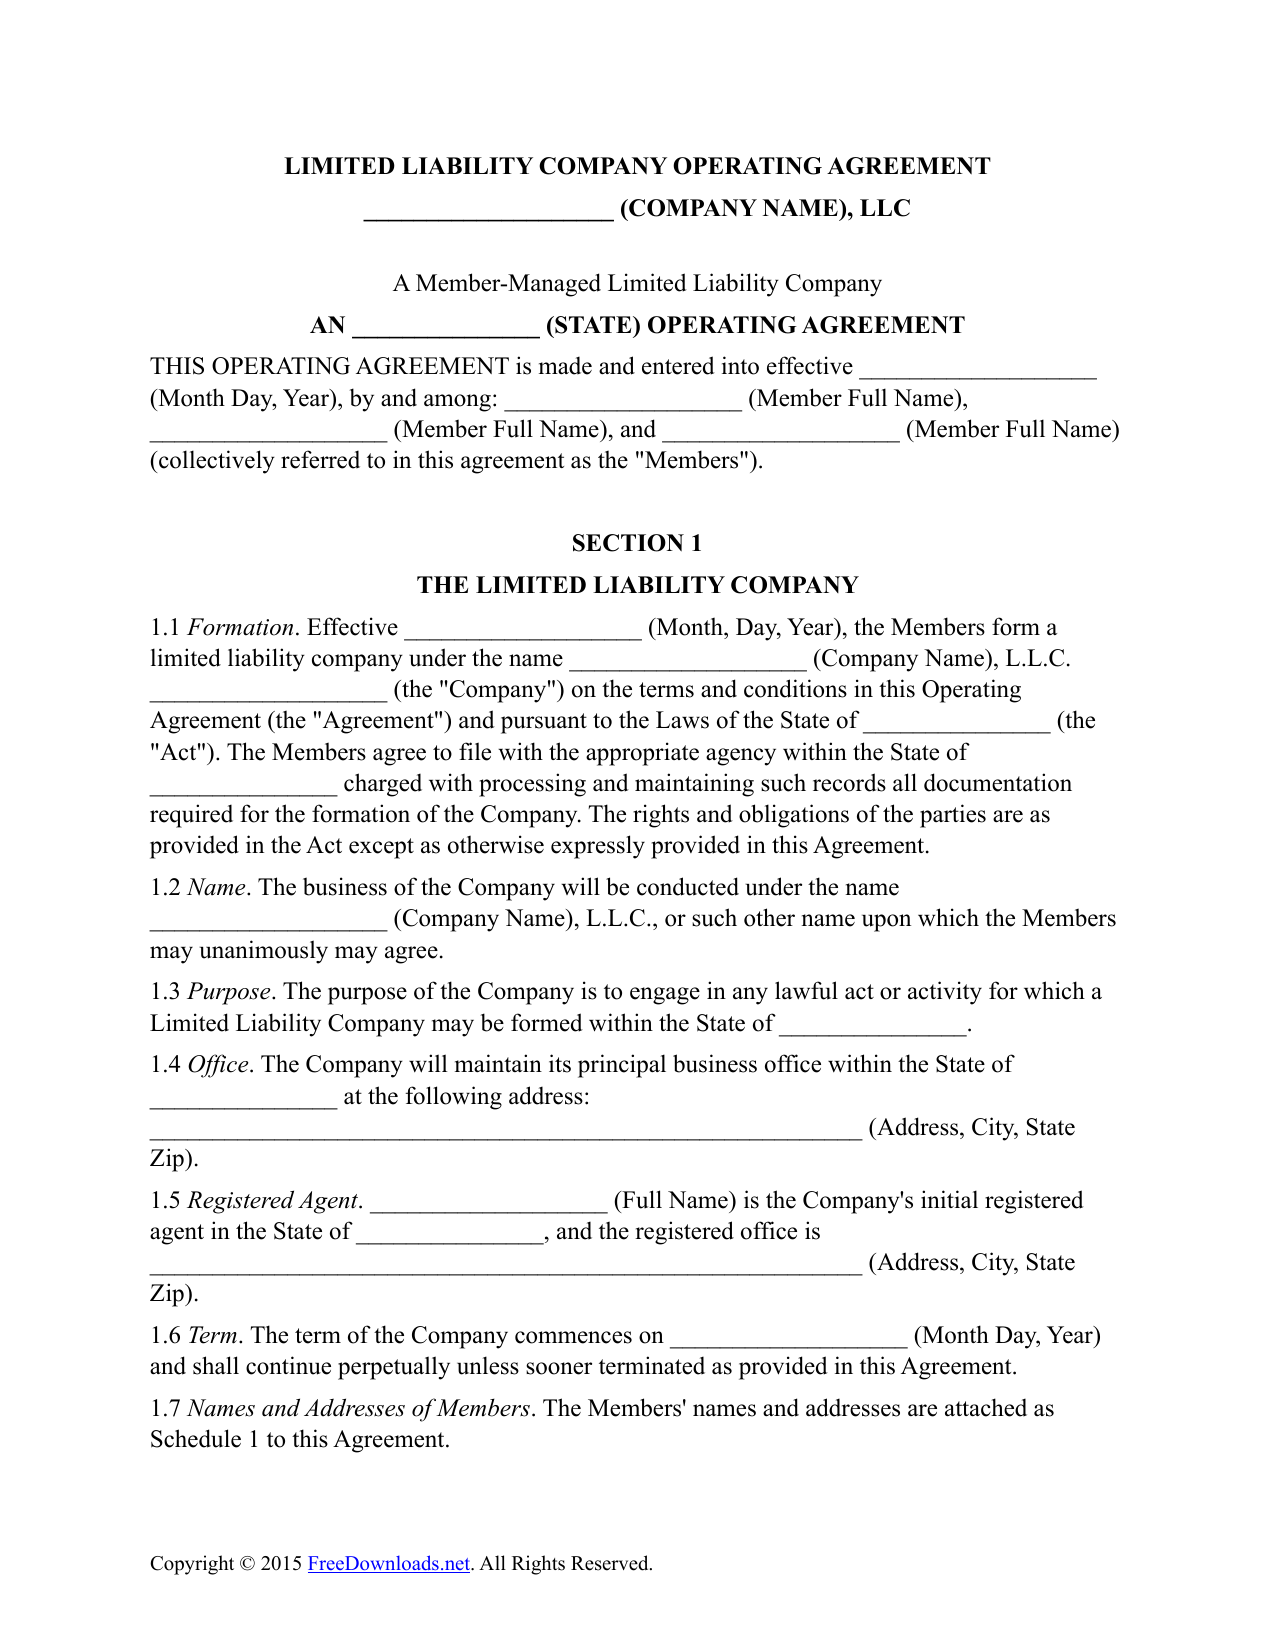 download-multi-member-llc-operating-agreement-template-pdf-rtf